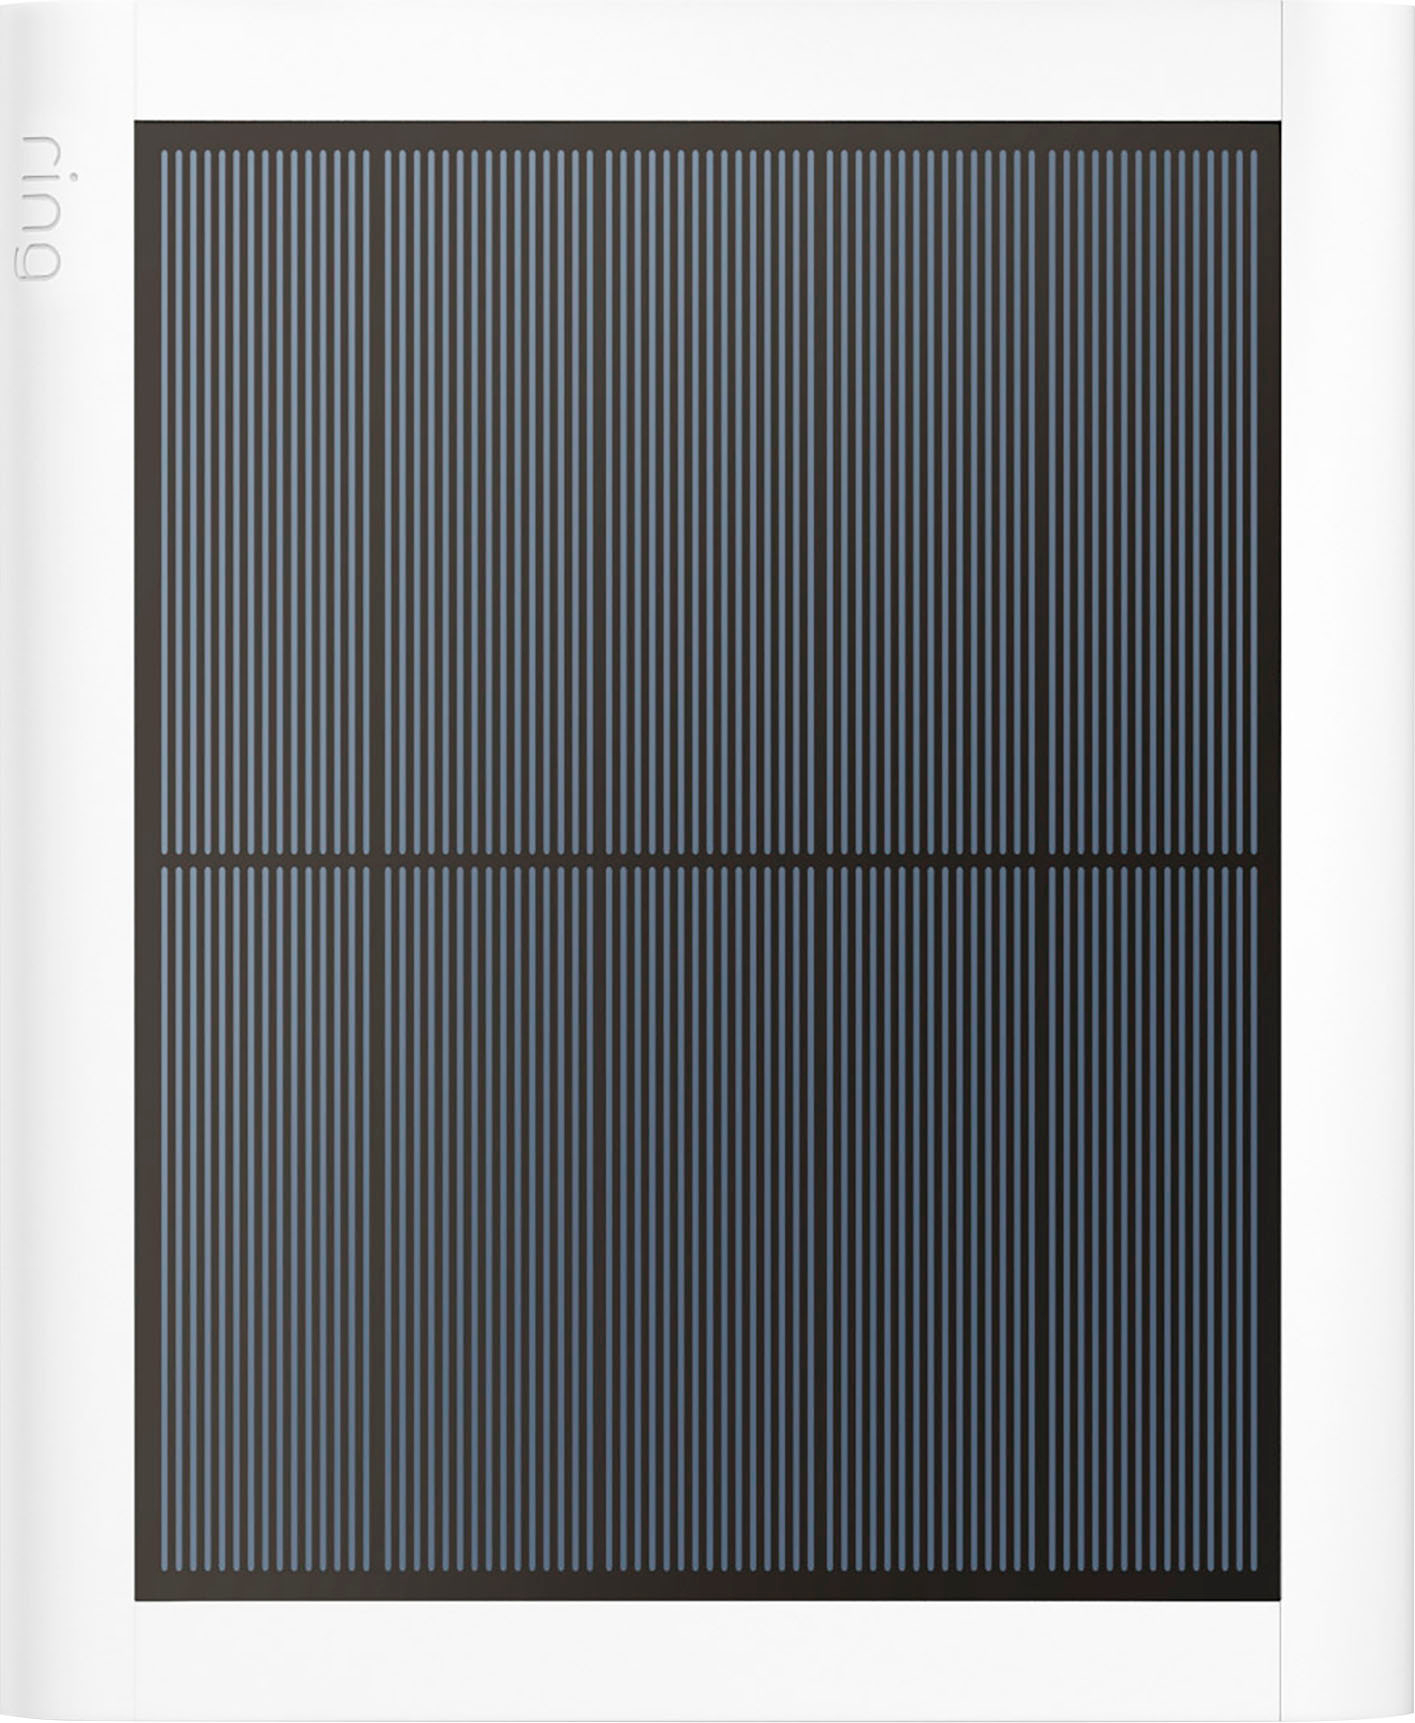 Kit 4 Paneles Solar 455w + 2 Microinversor 700w/110v +estruc